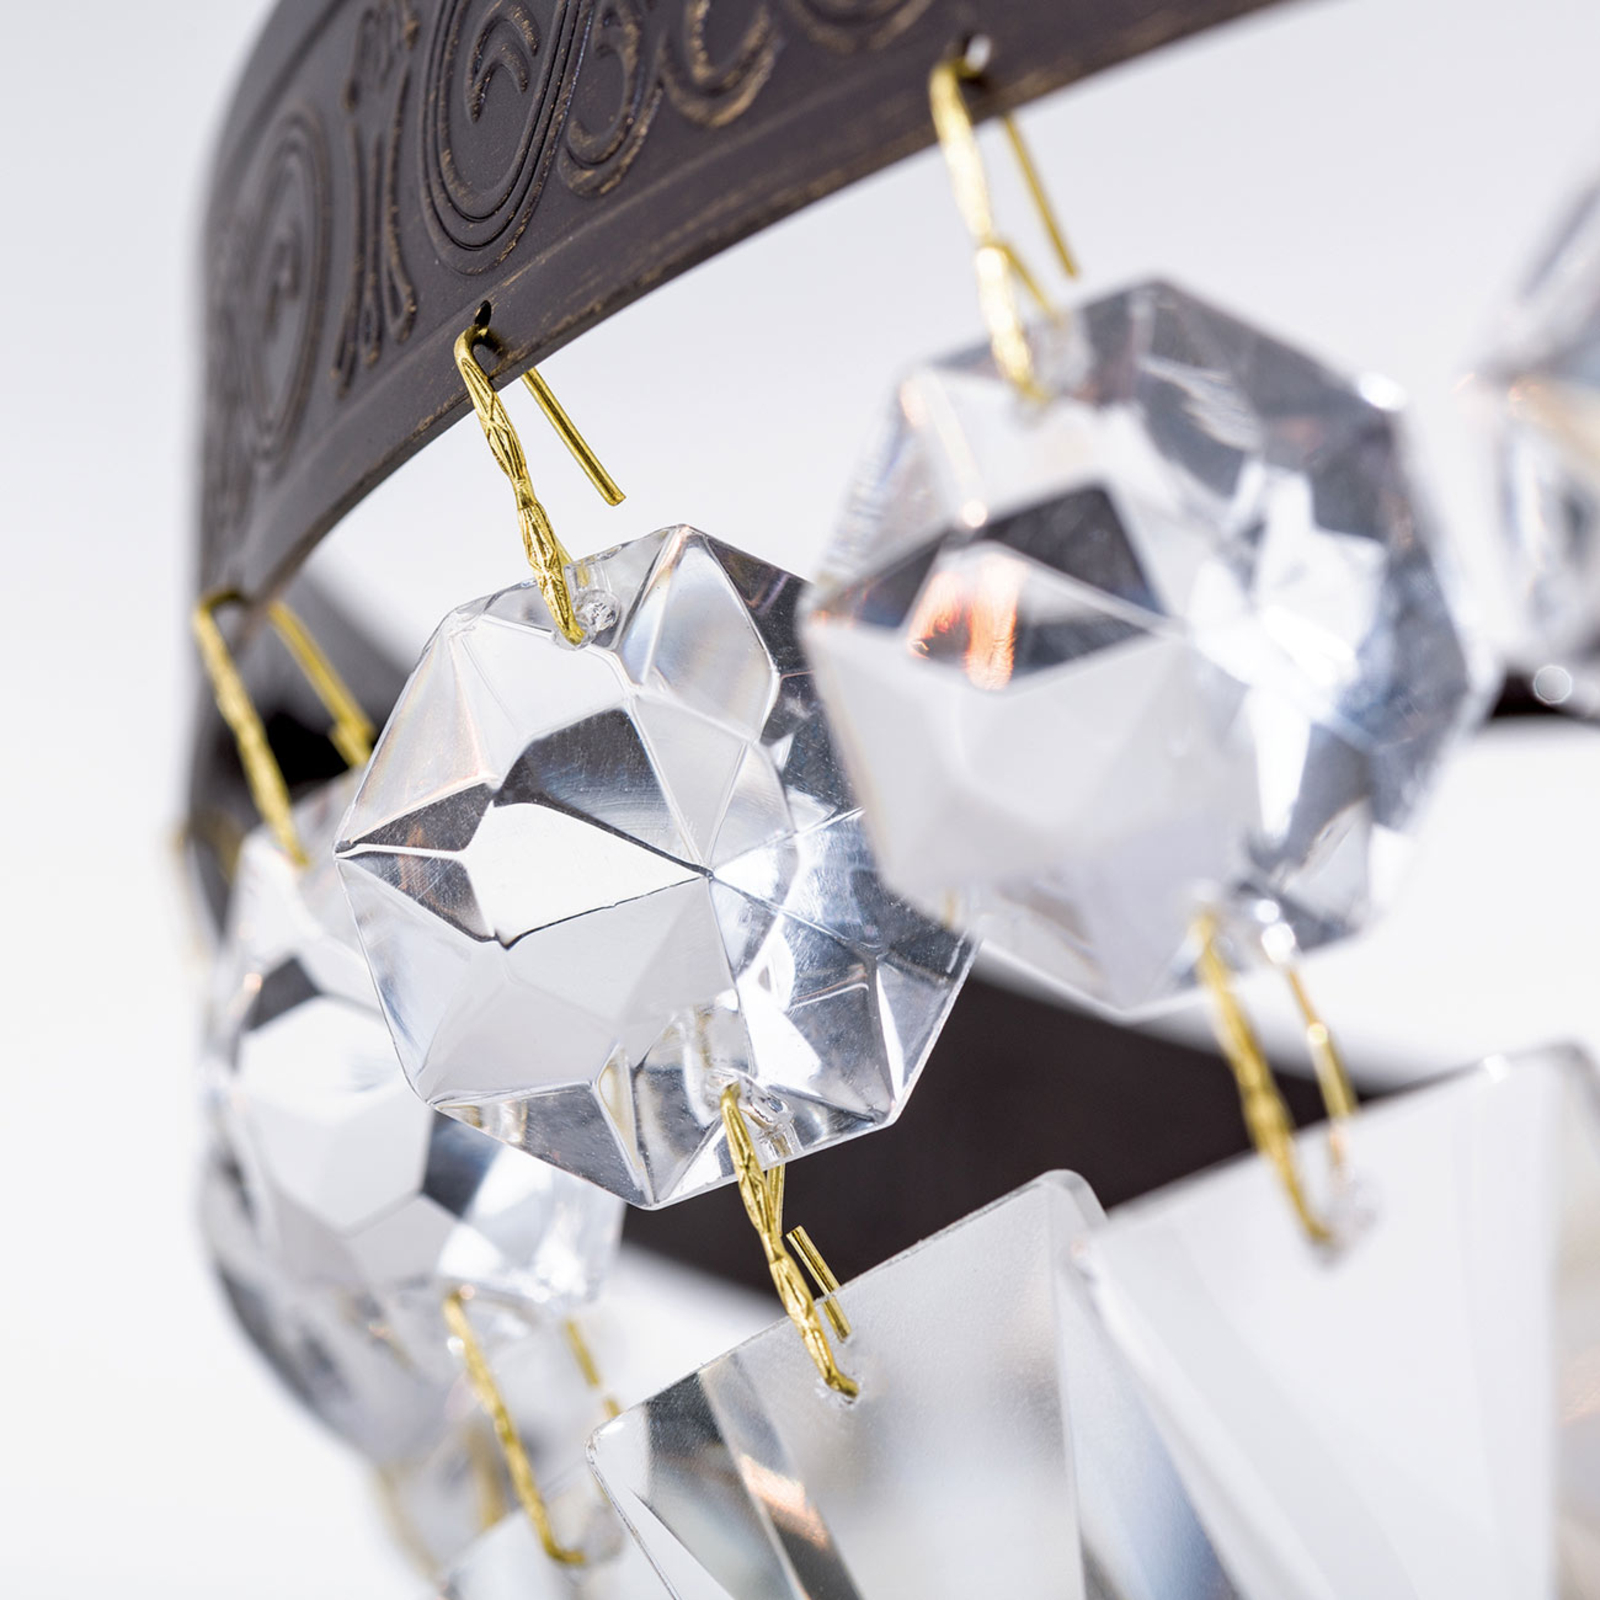 Andara ceiling light, glass crystal chains Ø 40 cm